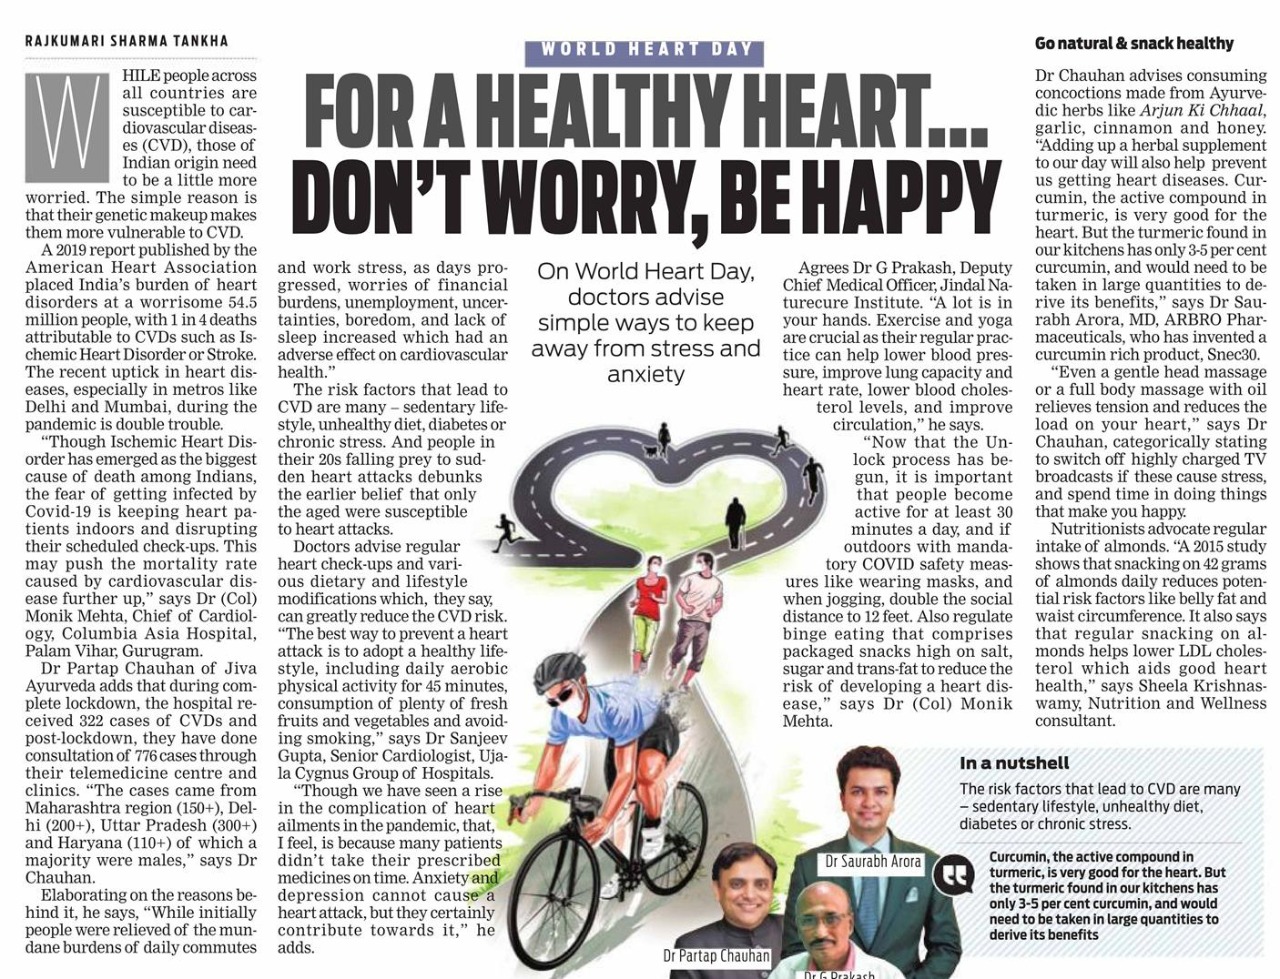 World heart day article by Jiva